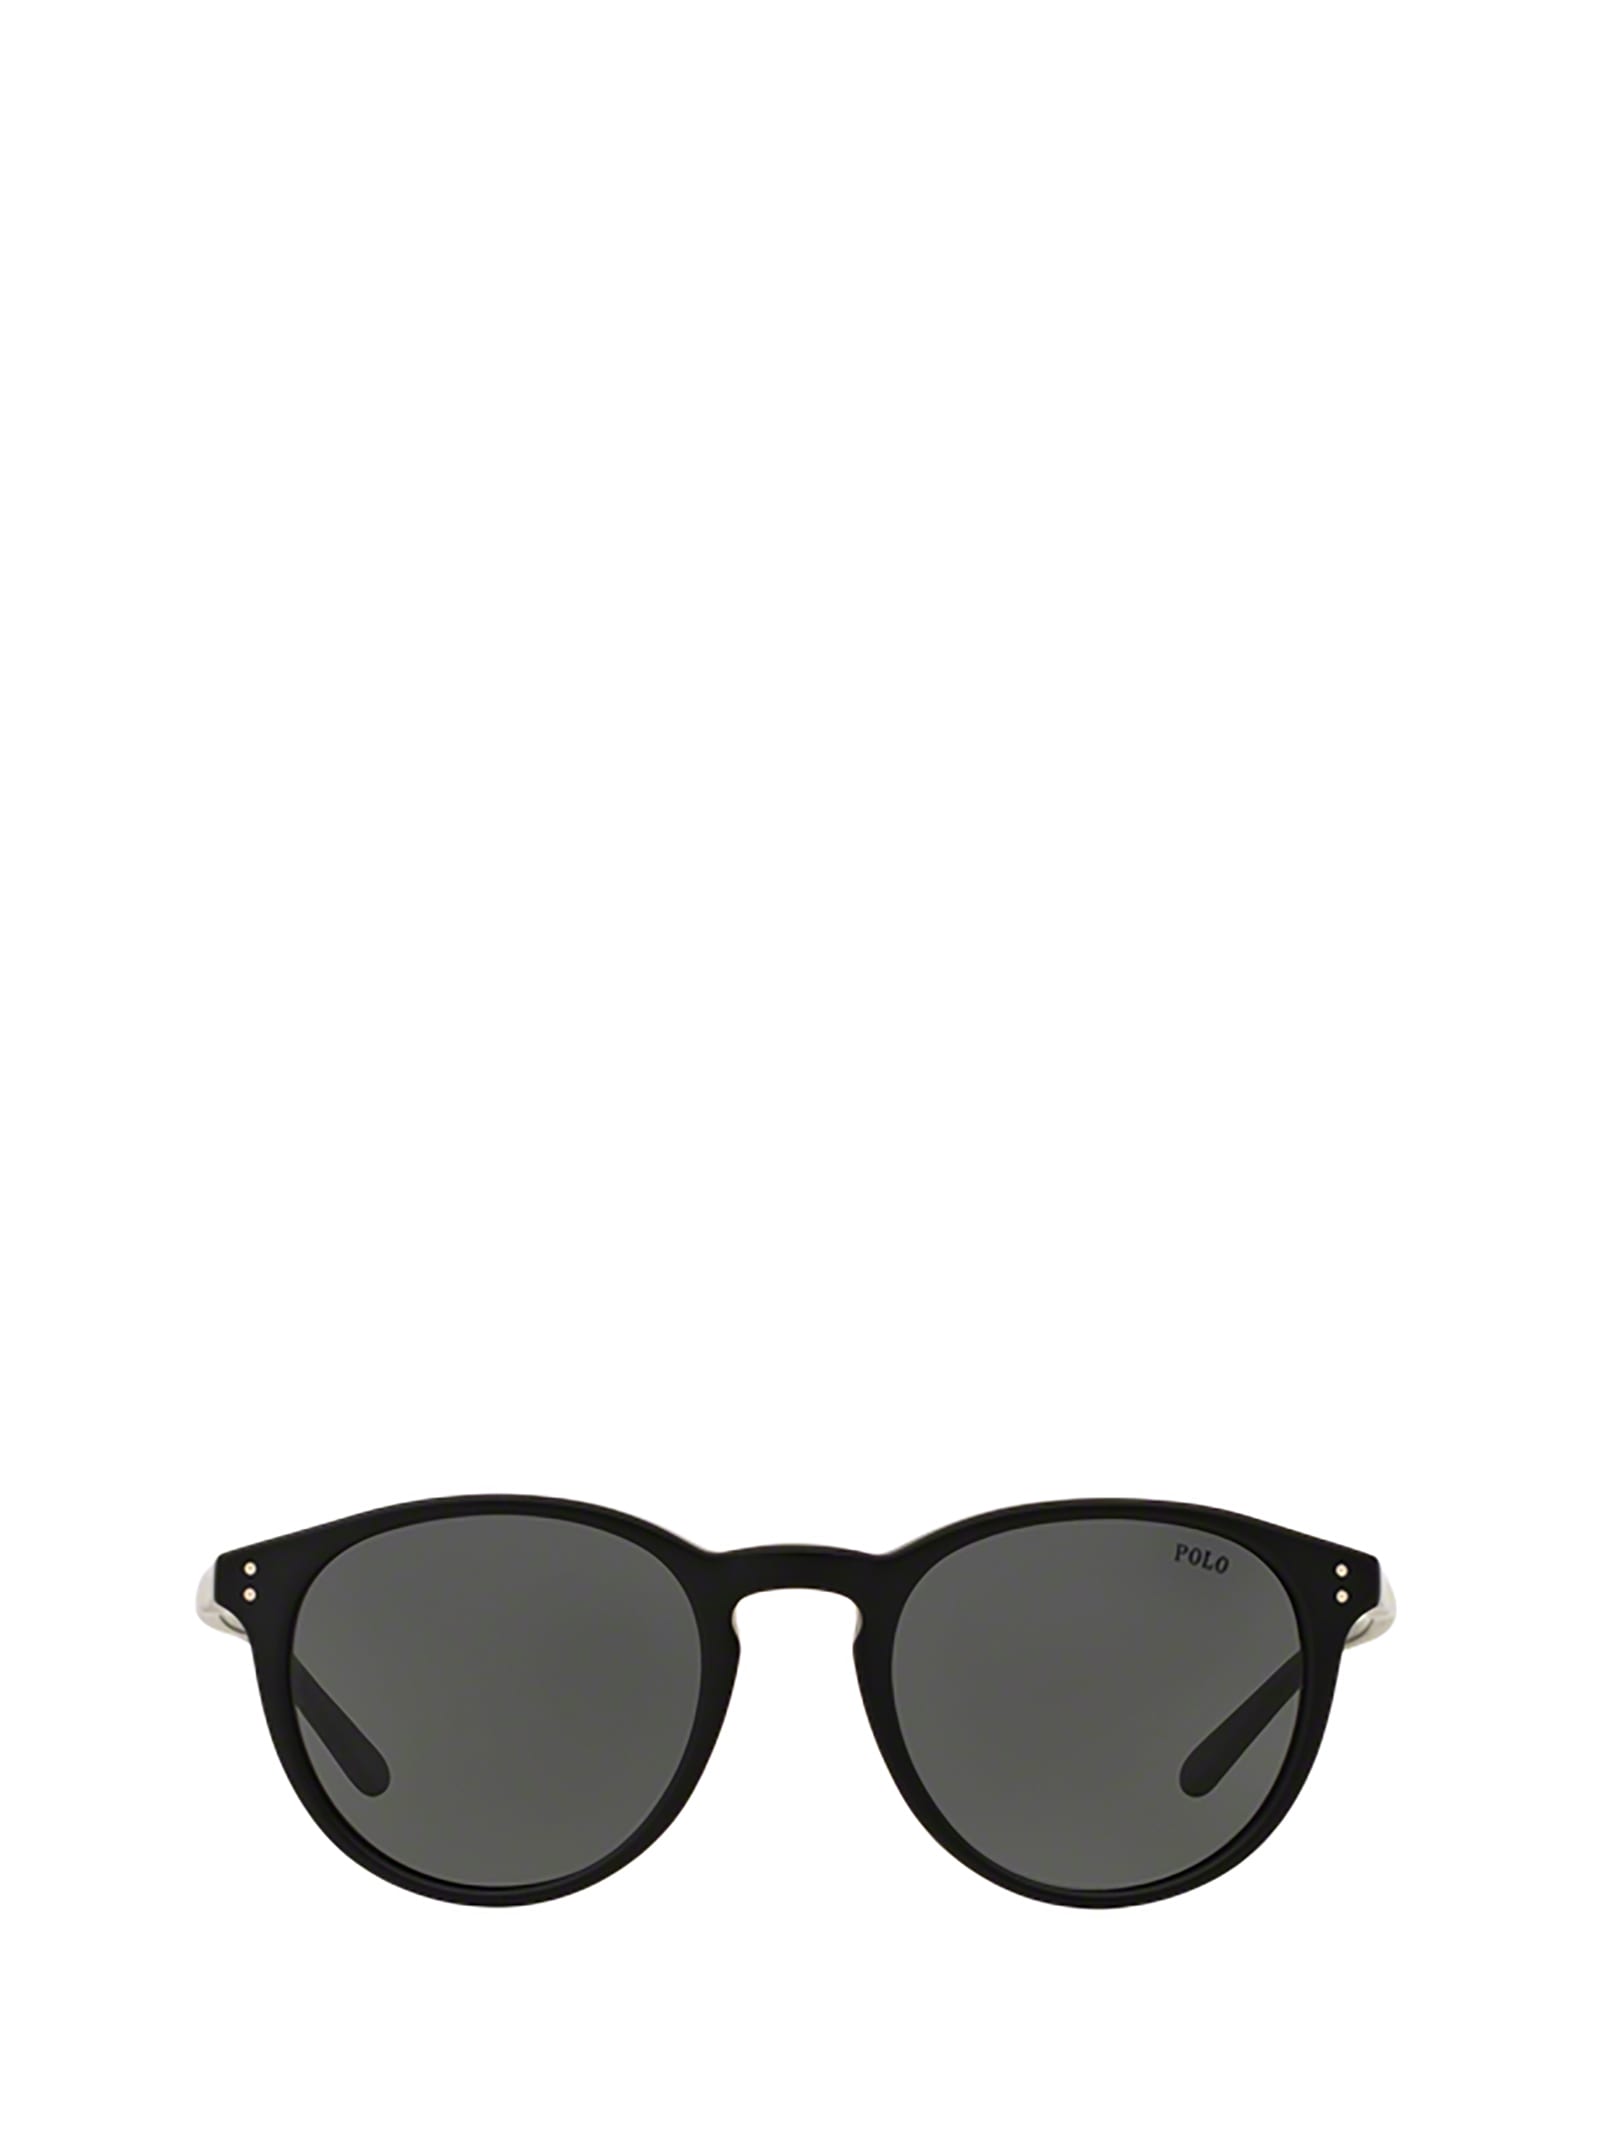 Ph4110 Matte Black Sunglasses